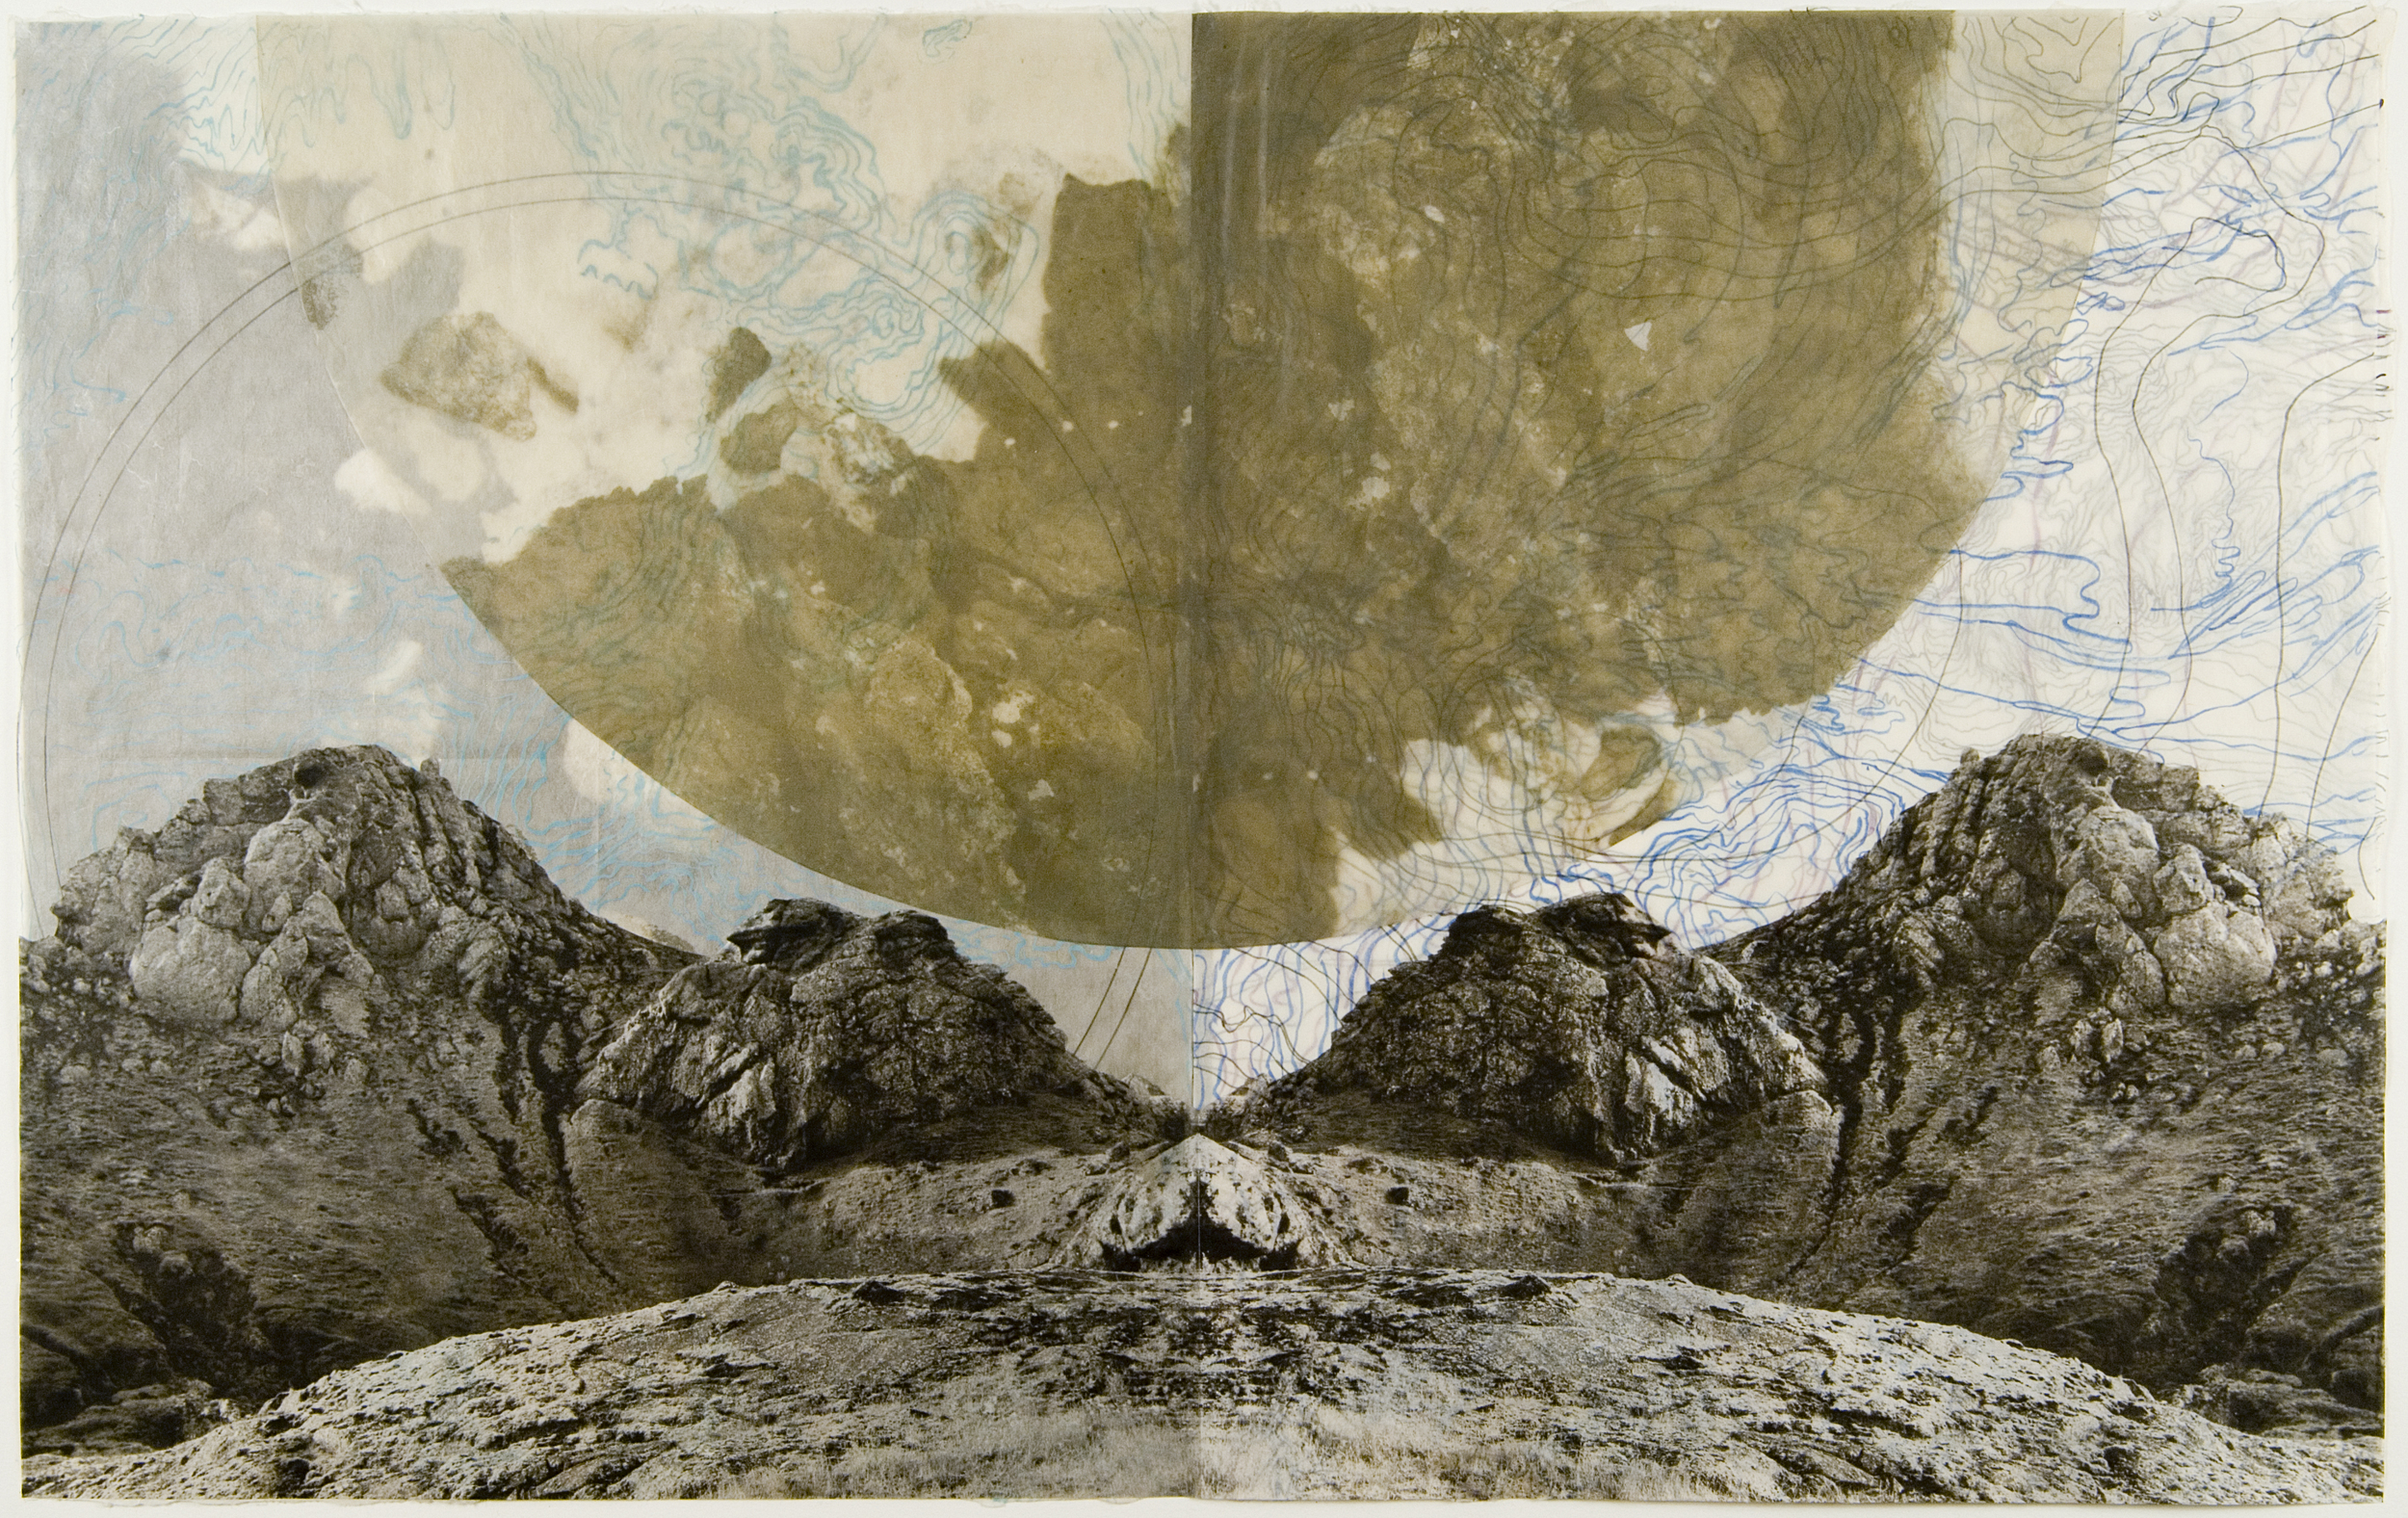    New Moon, &nbsp;2007   Photogravure on kozo shi, oil paint, wax,&nbsp;in layers   24.75” X 39.25"  